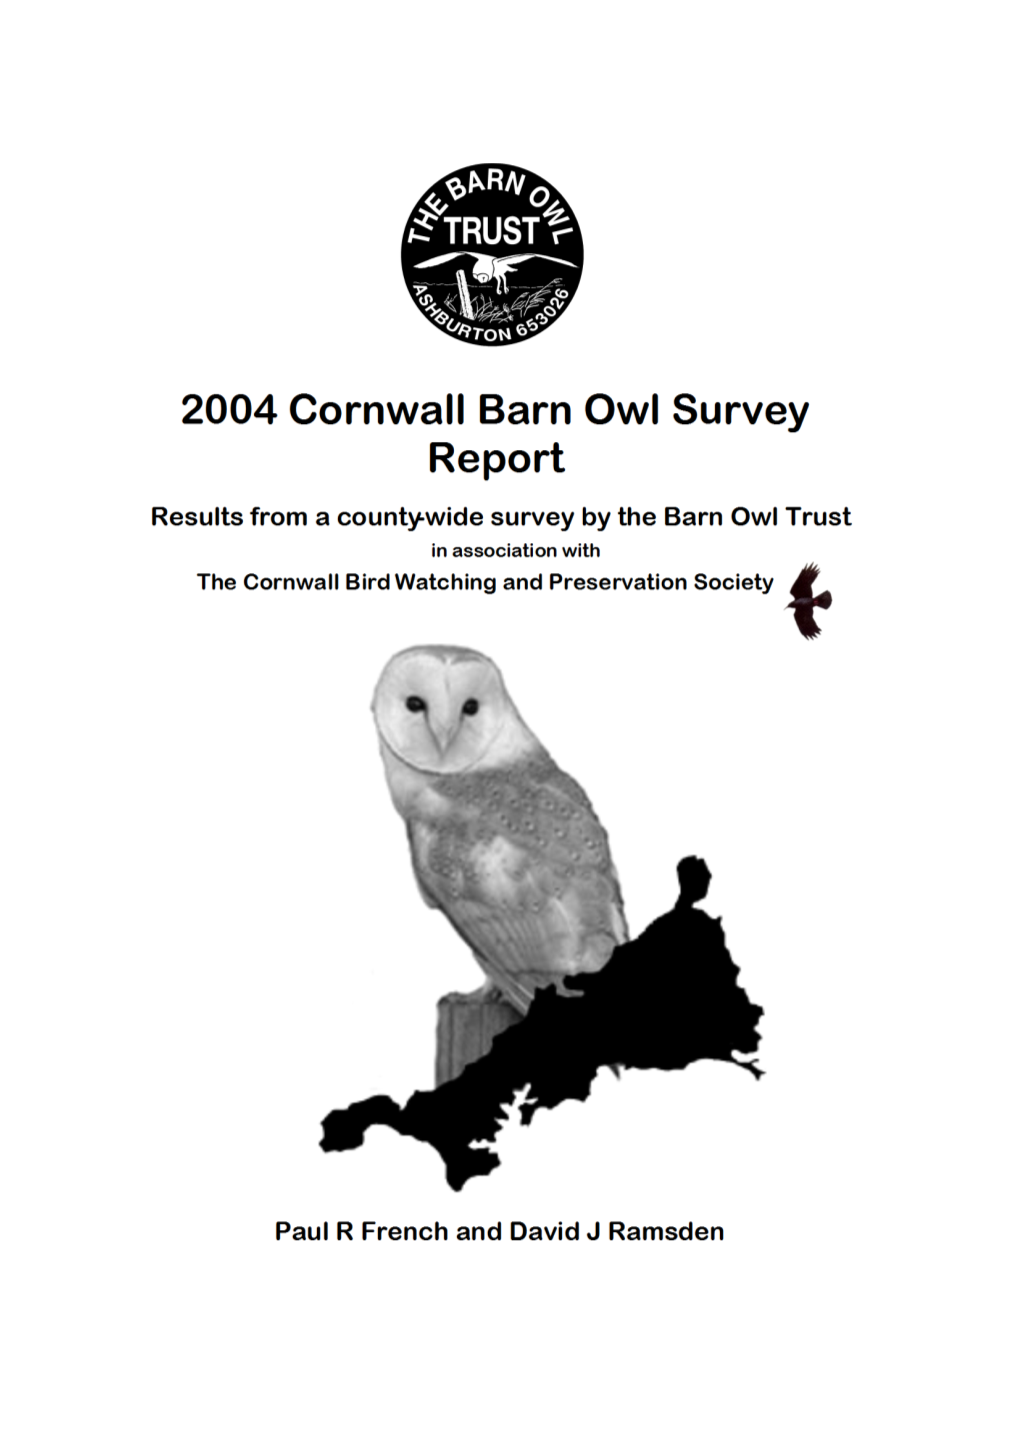 Cornwall Barn Owl Survey 2004